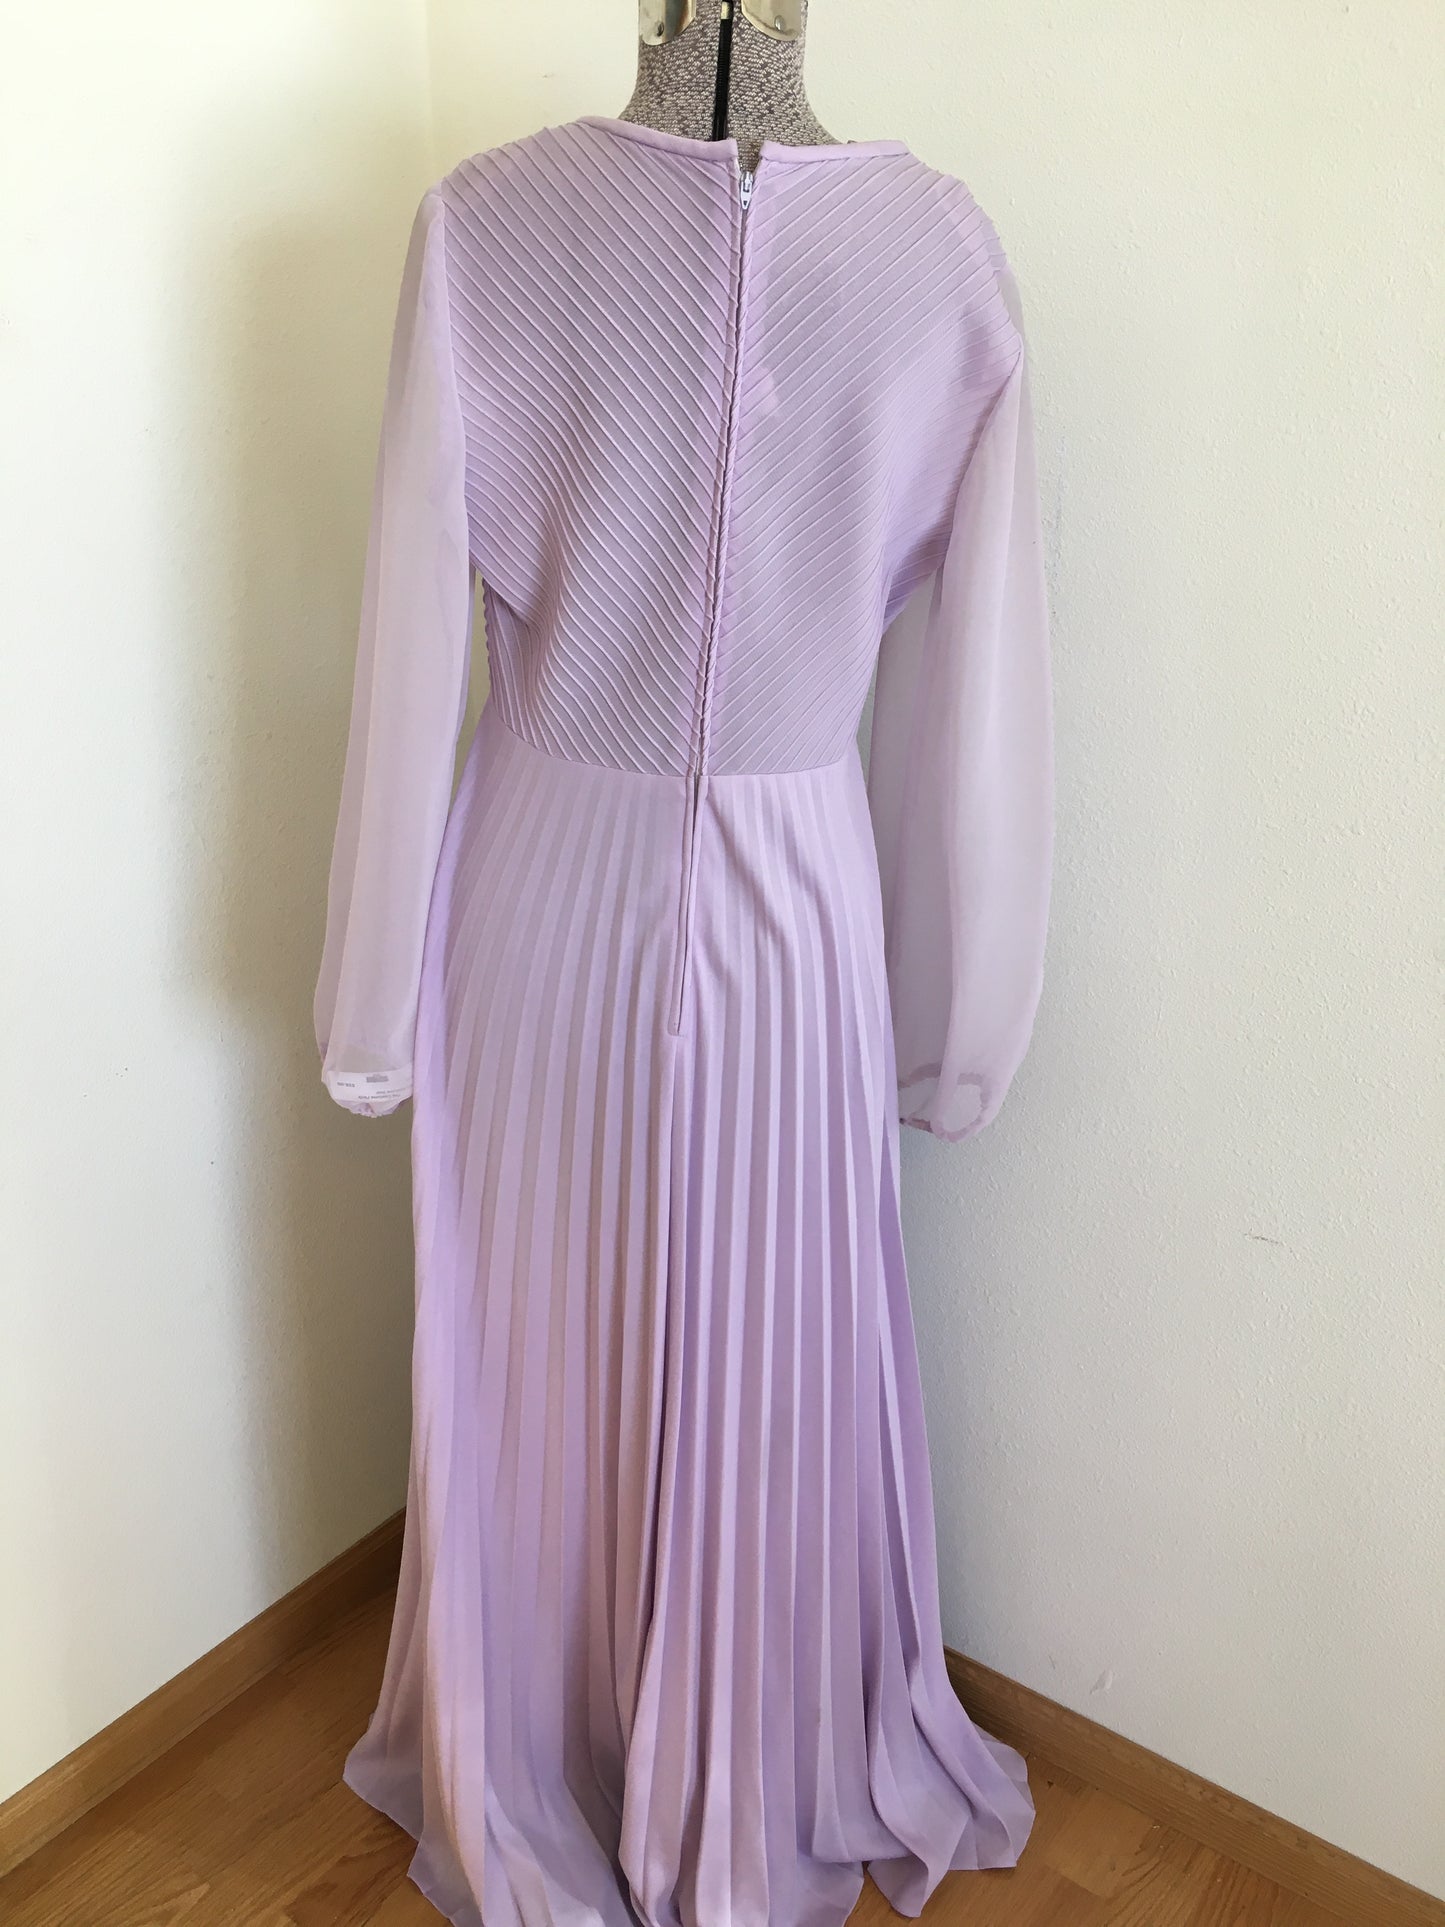 Vintage 60’s/70’s Women Lavender Pleated Dress Size 12 - 14